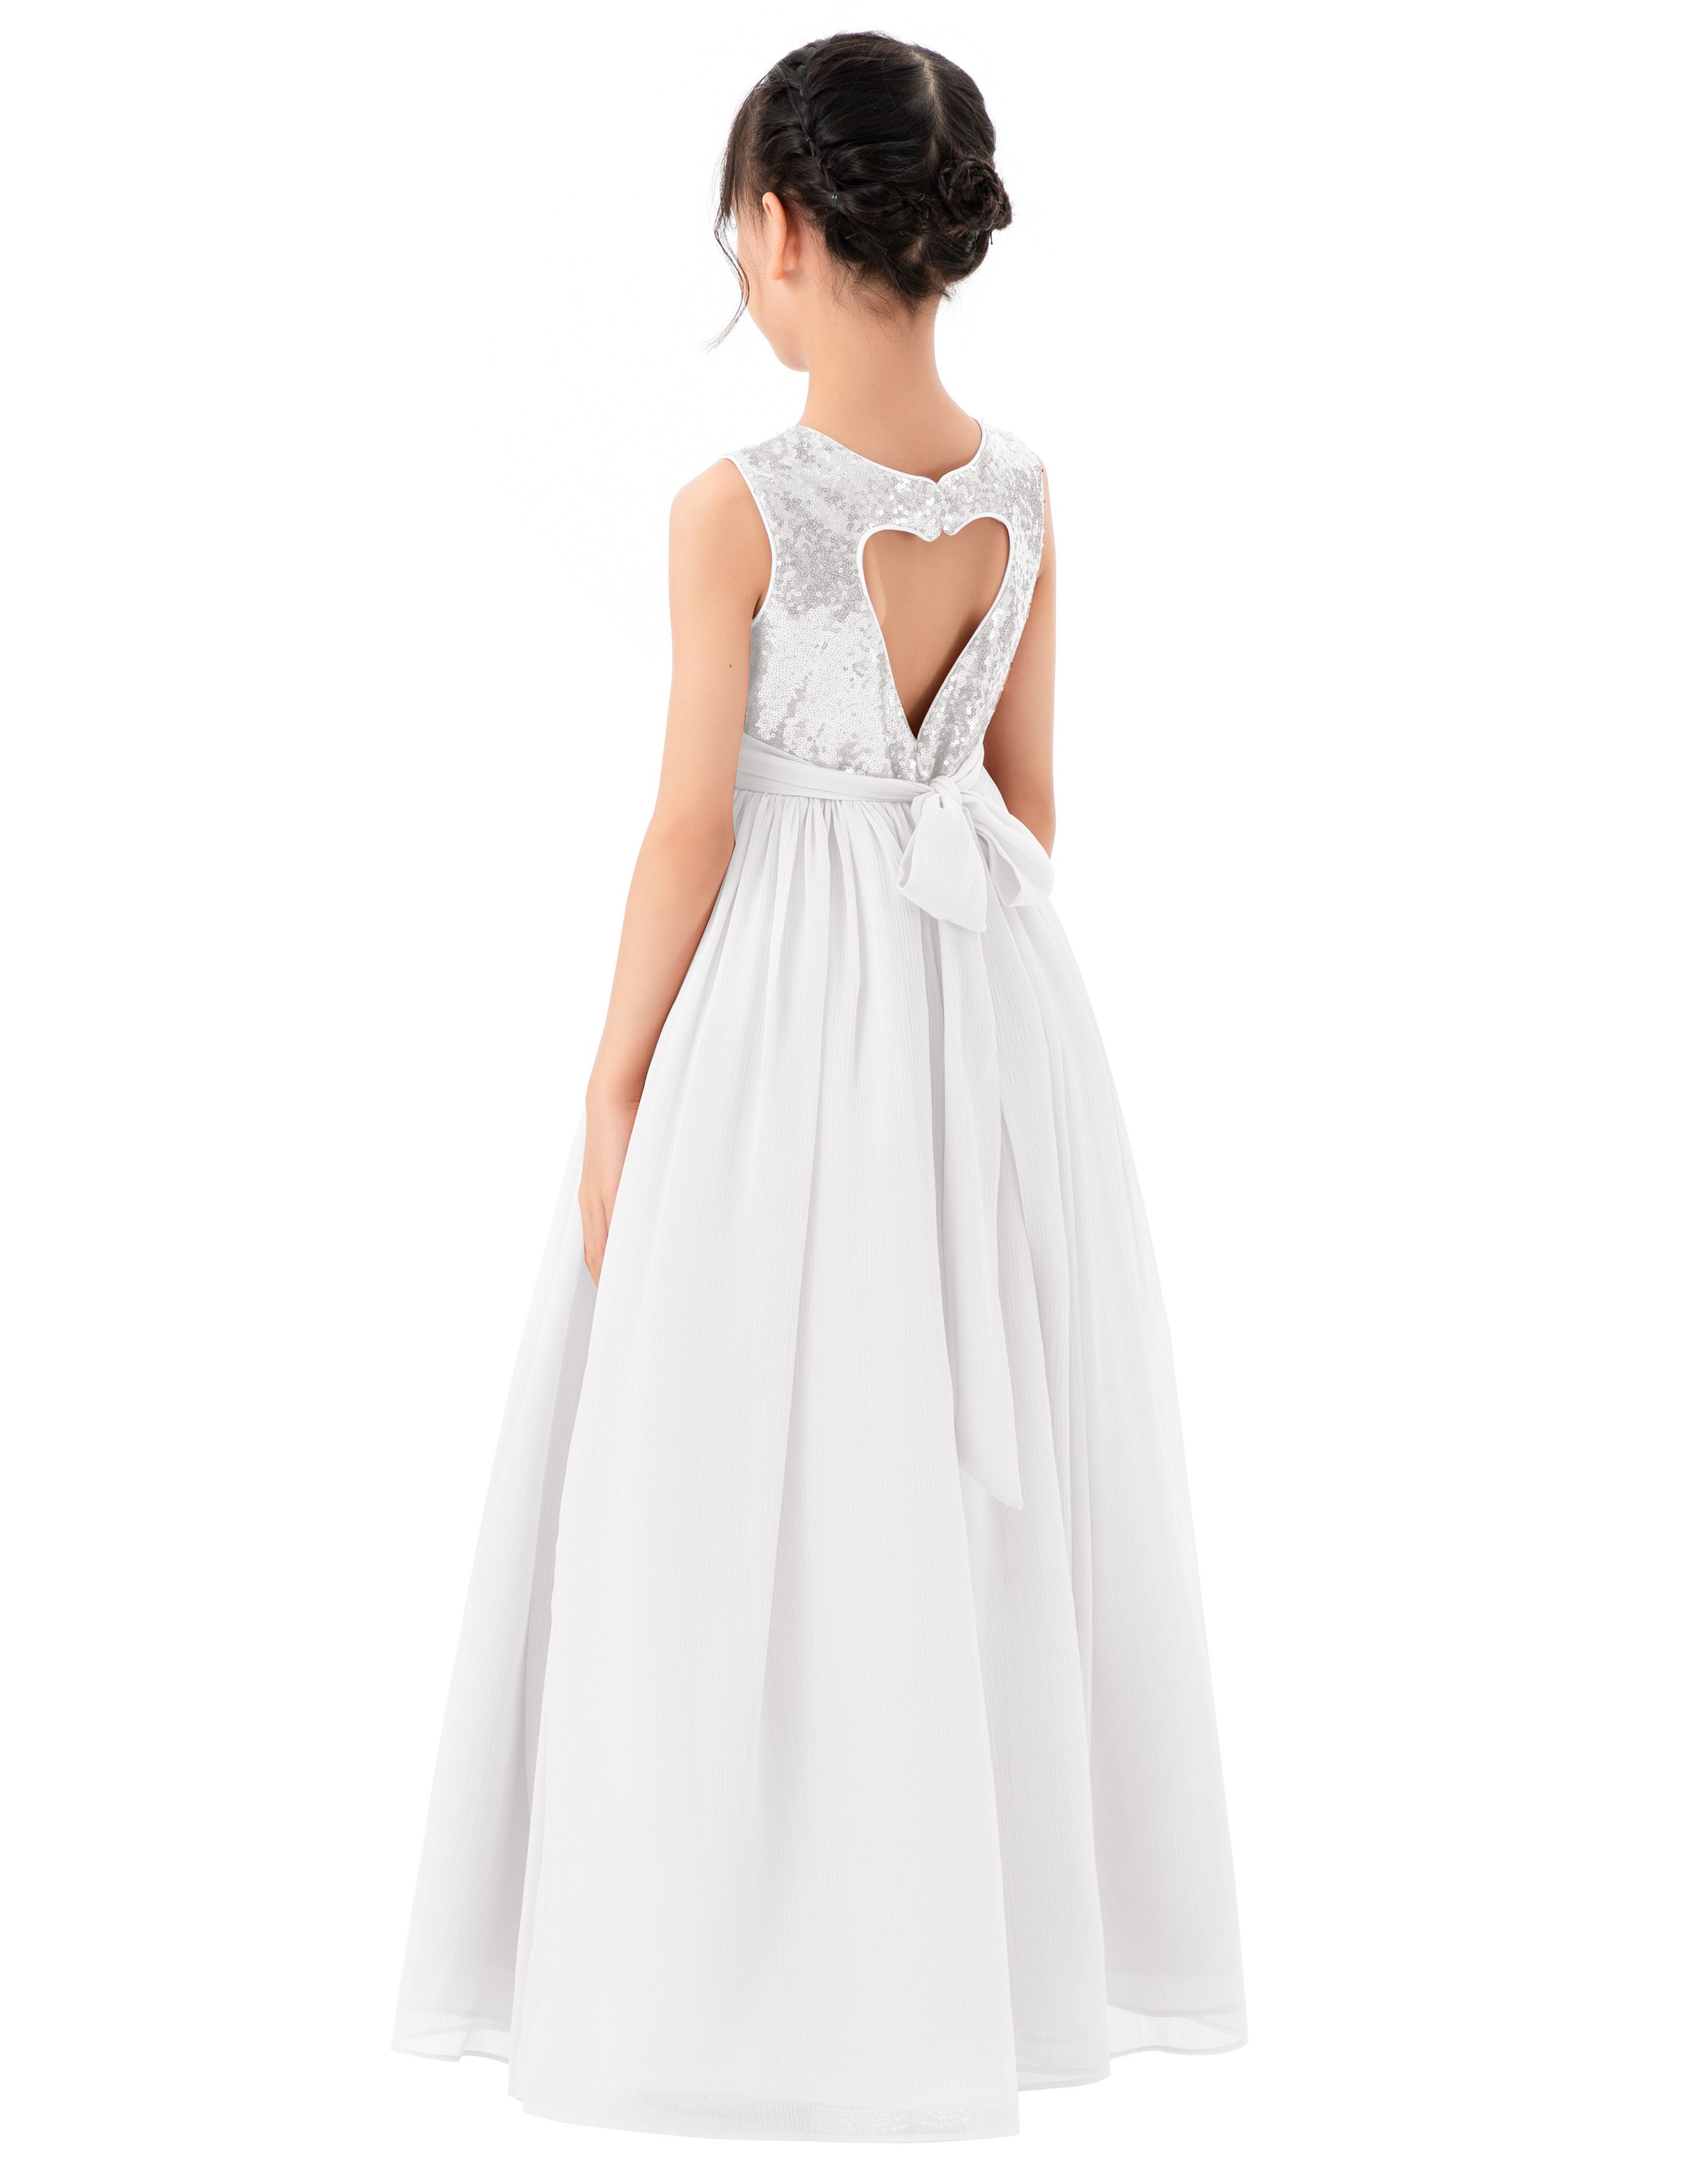 White Heart Cutout Chiffon Flower Girl Dress SH1